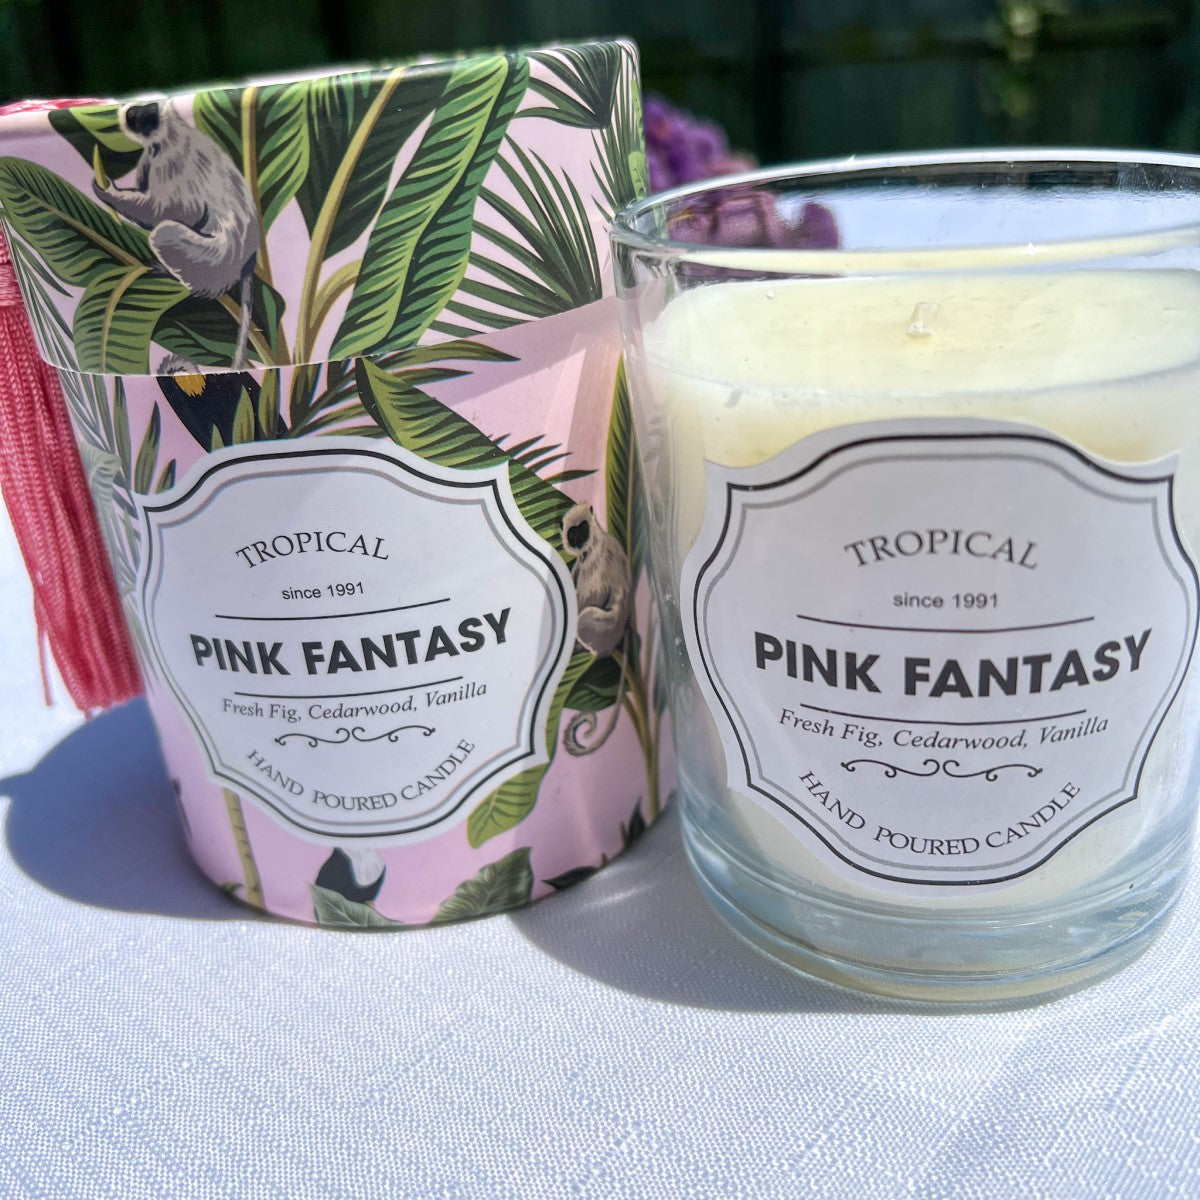 Tropical Pink Fantasy Fresh Fig, Cedarwood & Vanilla Hand Poured Candle 11cm